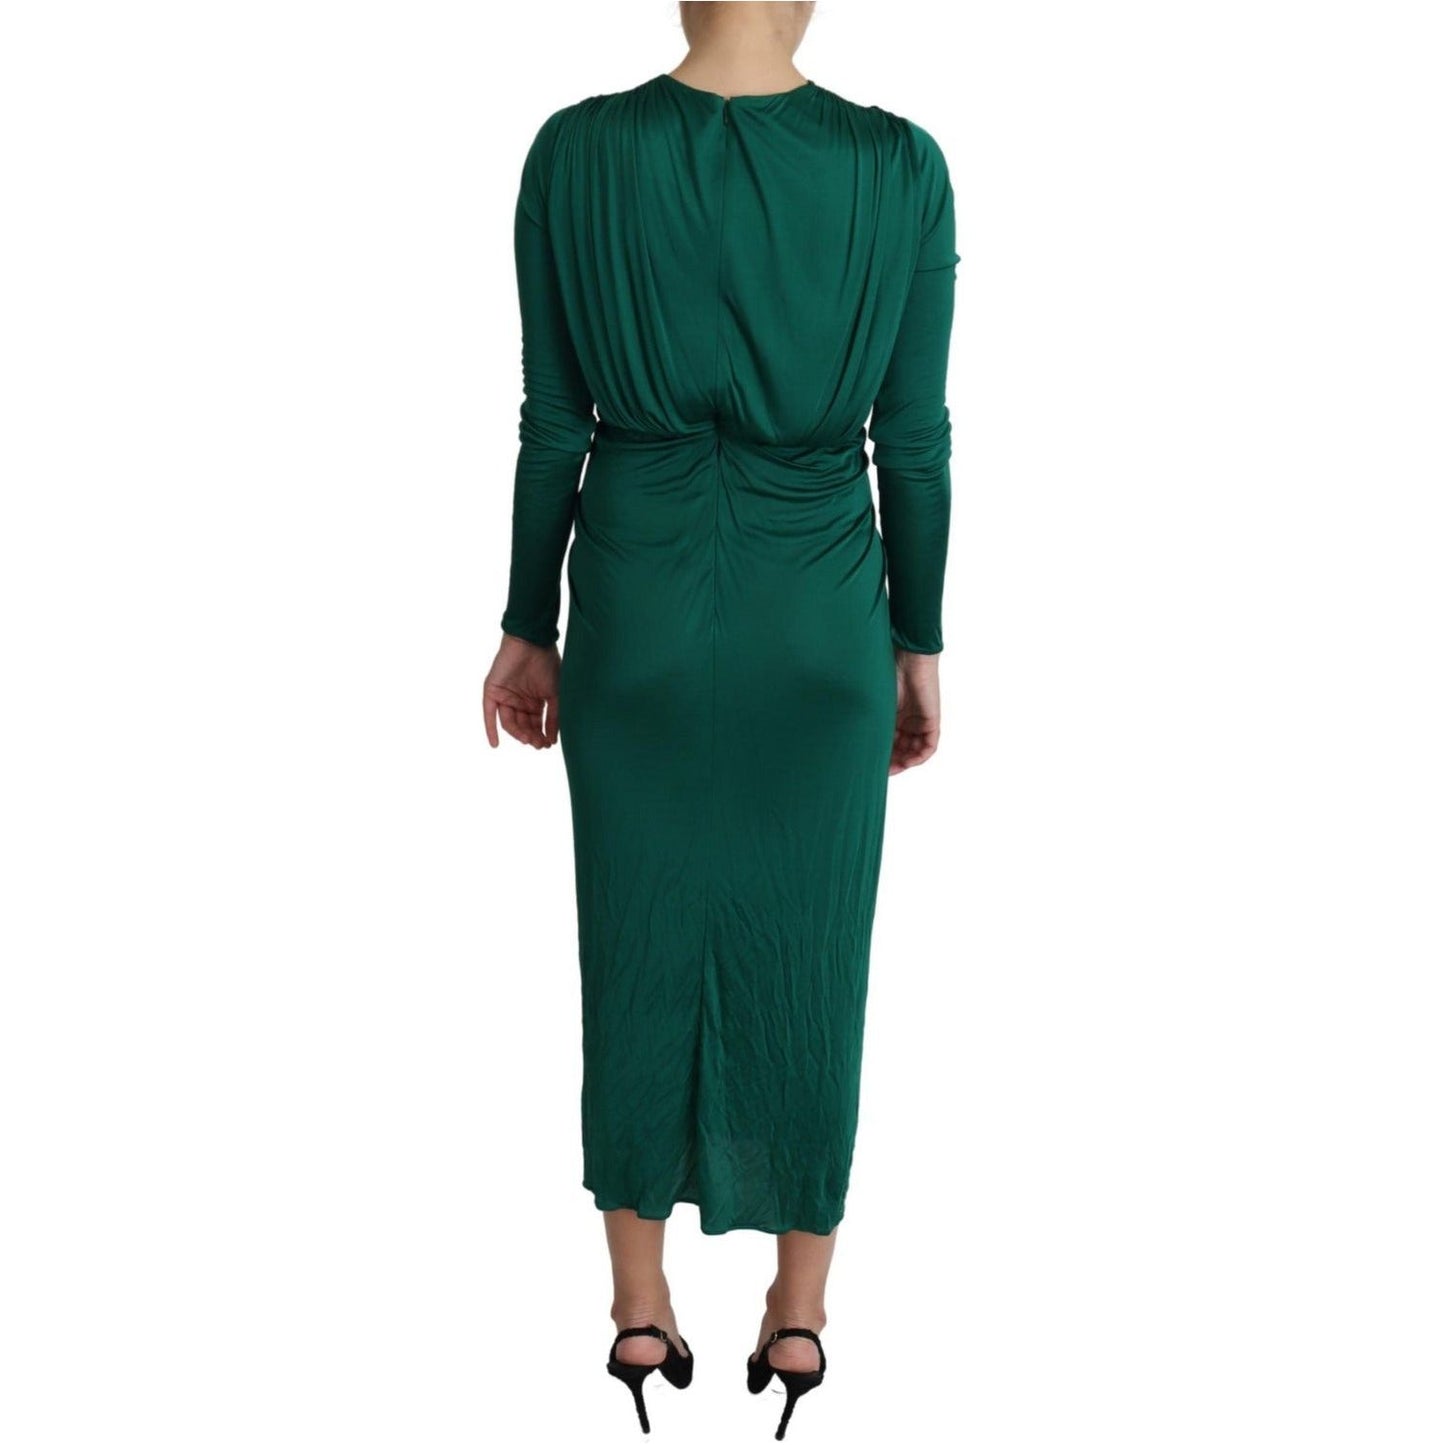 Dolce & Gabbana Emerald Elegance Bodycon Midi Dress green-fitted-silhouette-midi-viscose-dress IMG_9481-scaled-e5142ee3-878.jpg